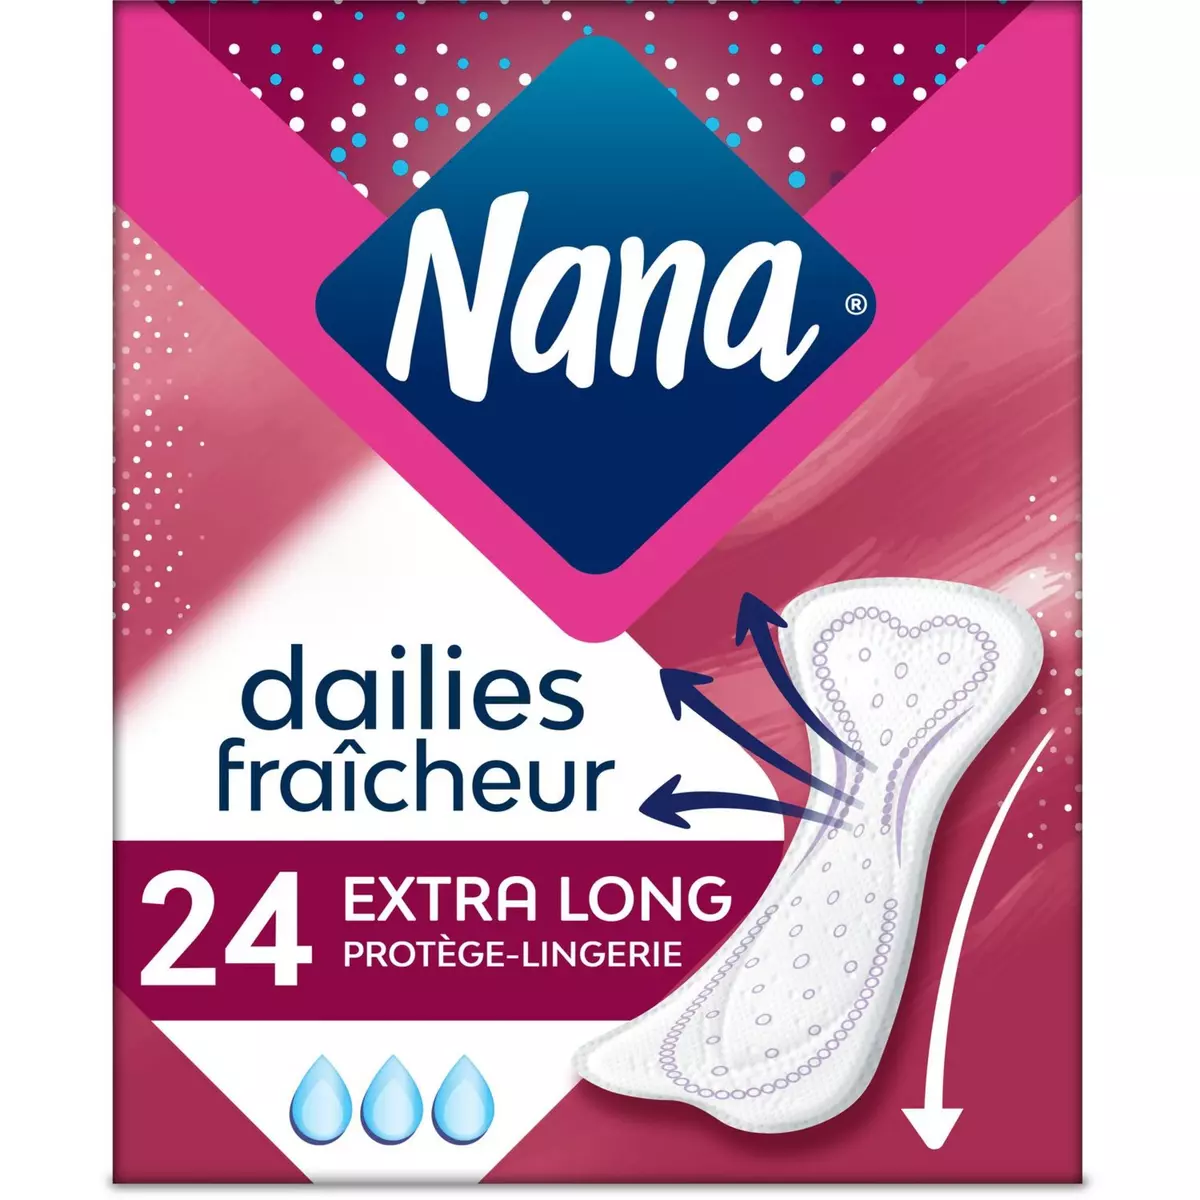 NANA Protège-lingerie fraîcheur extra long 24 protège-lingerie